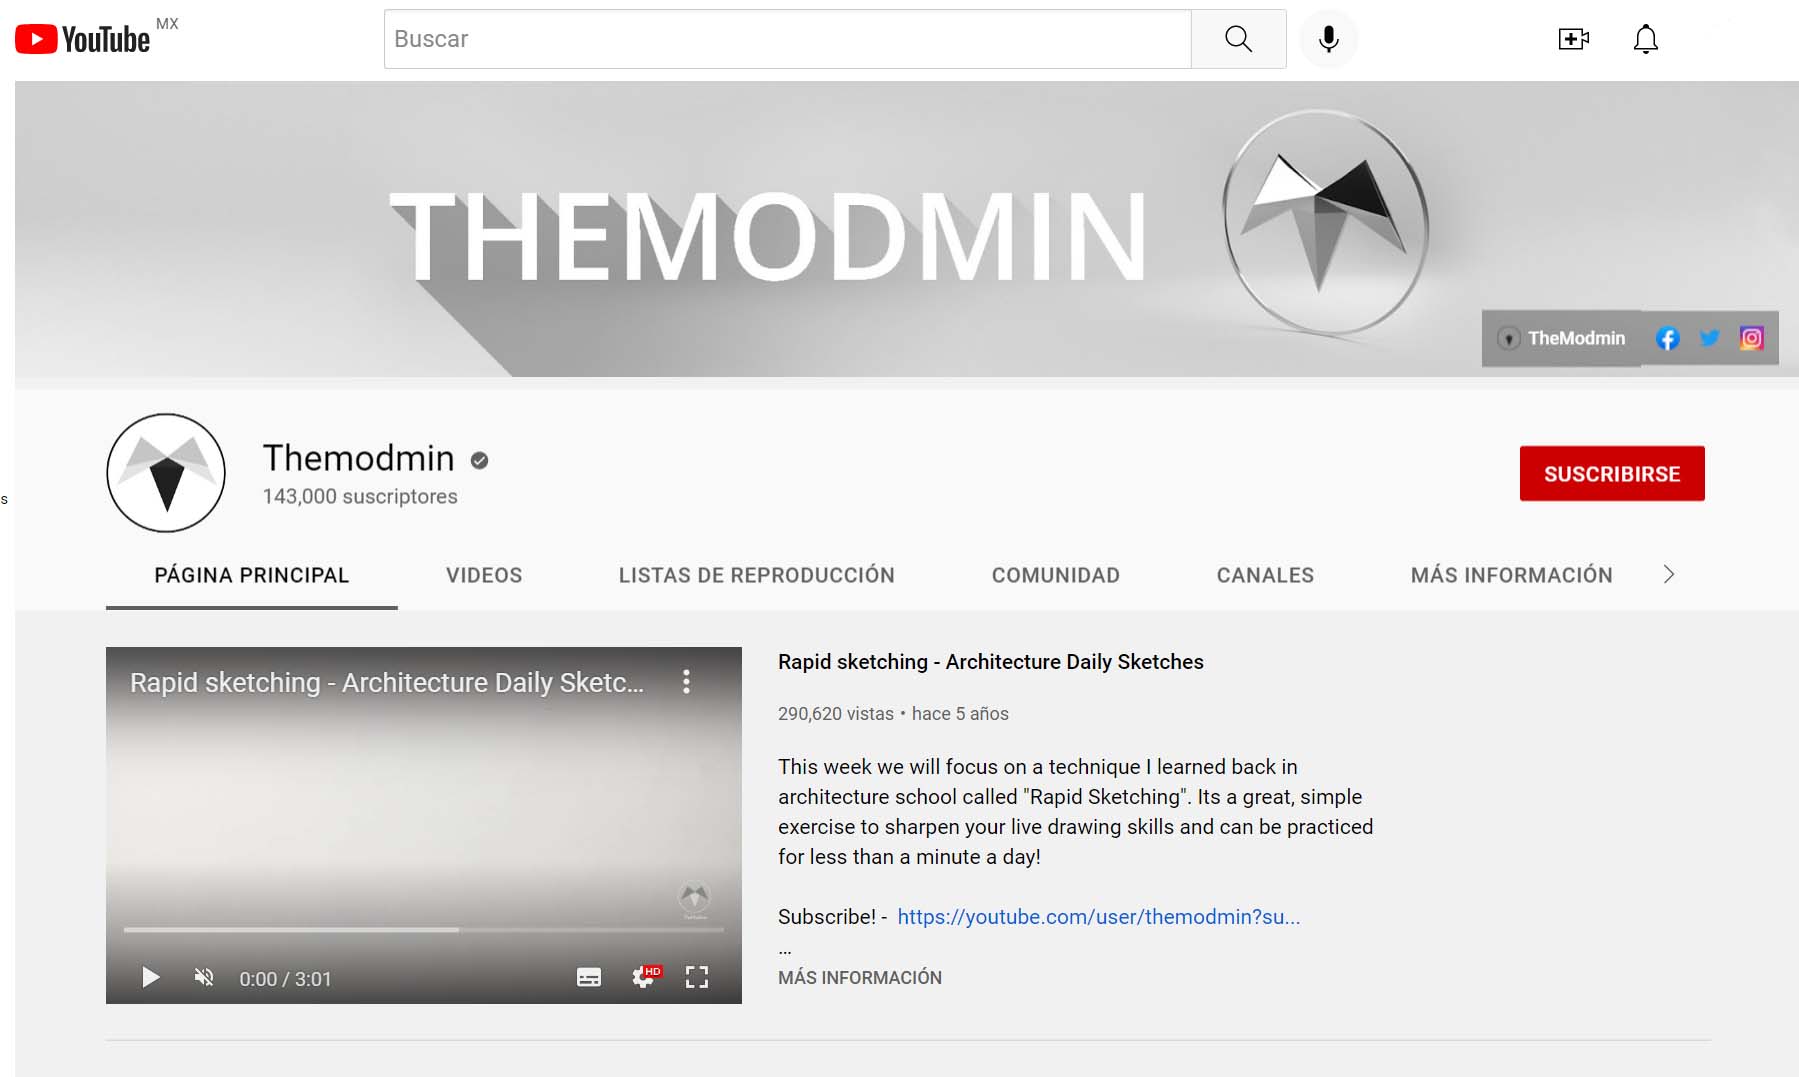 ejemplos de banners para YouTube: Themodmin